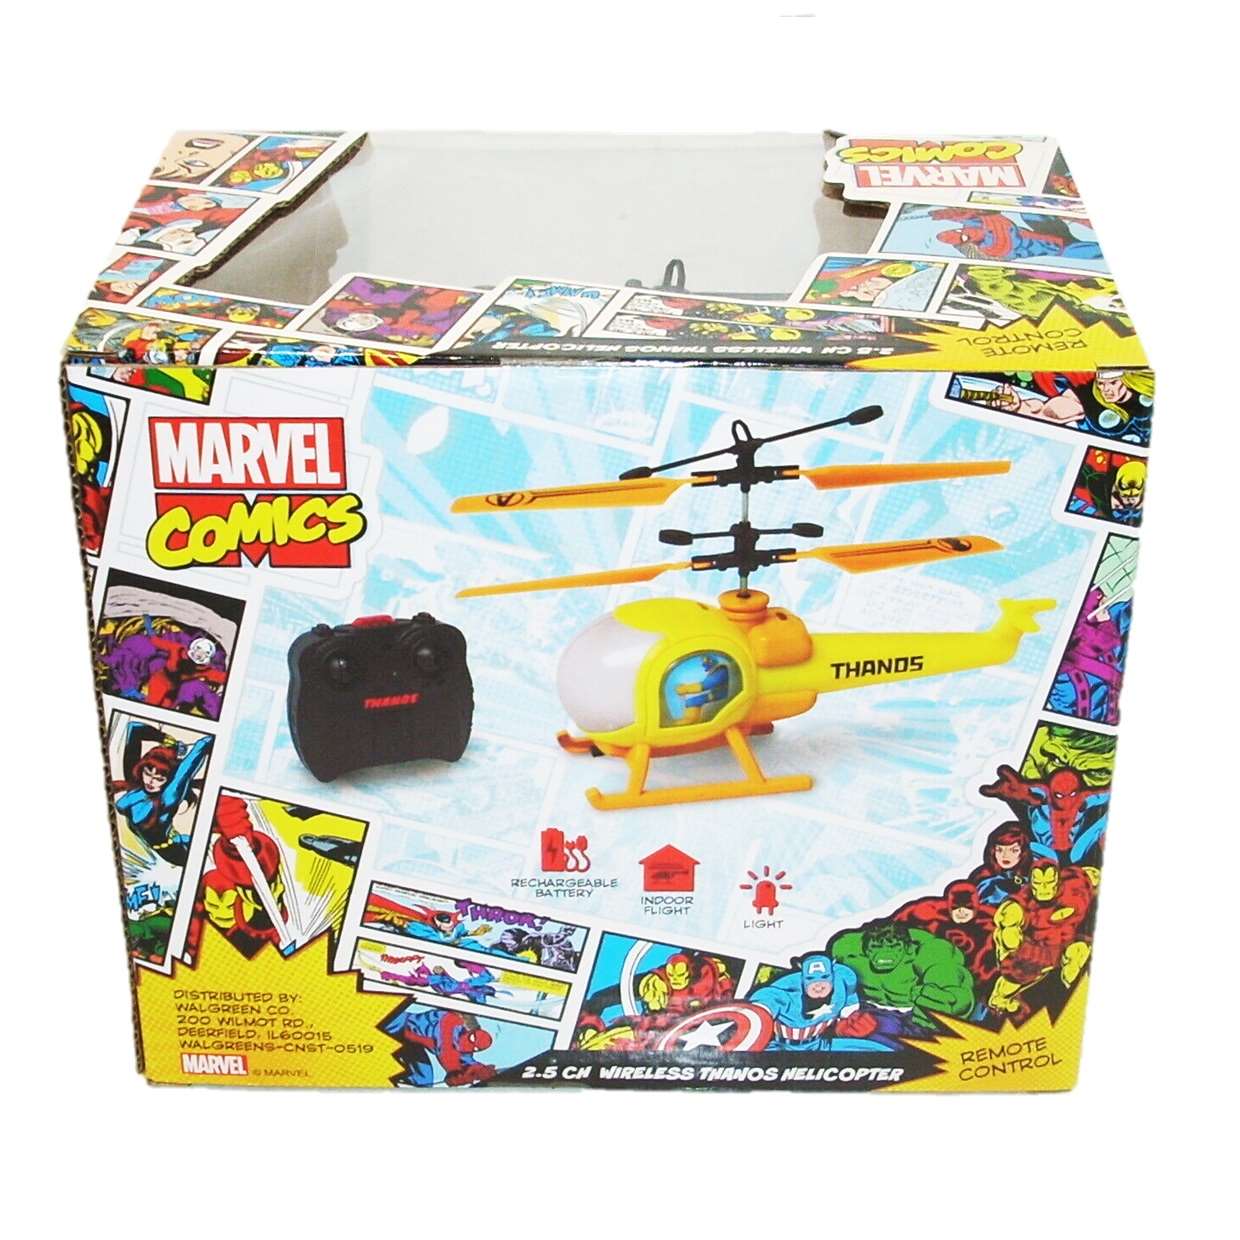 Wireless Thanos Helicopter 2.5 Control Remoto Marvel Comics